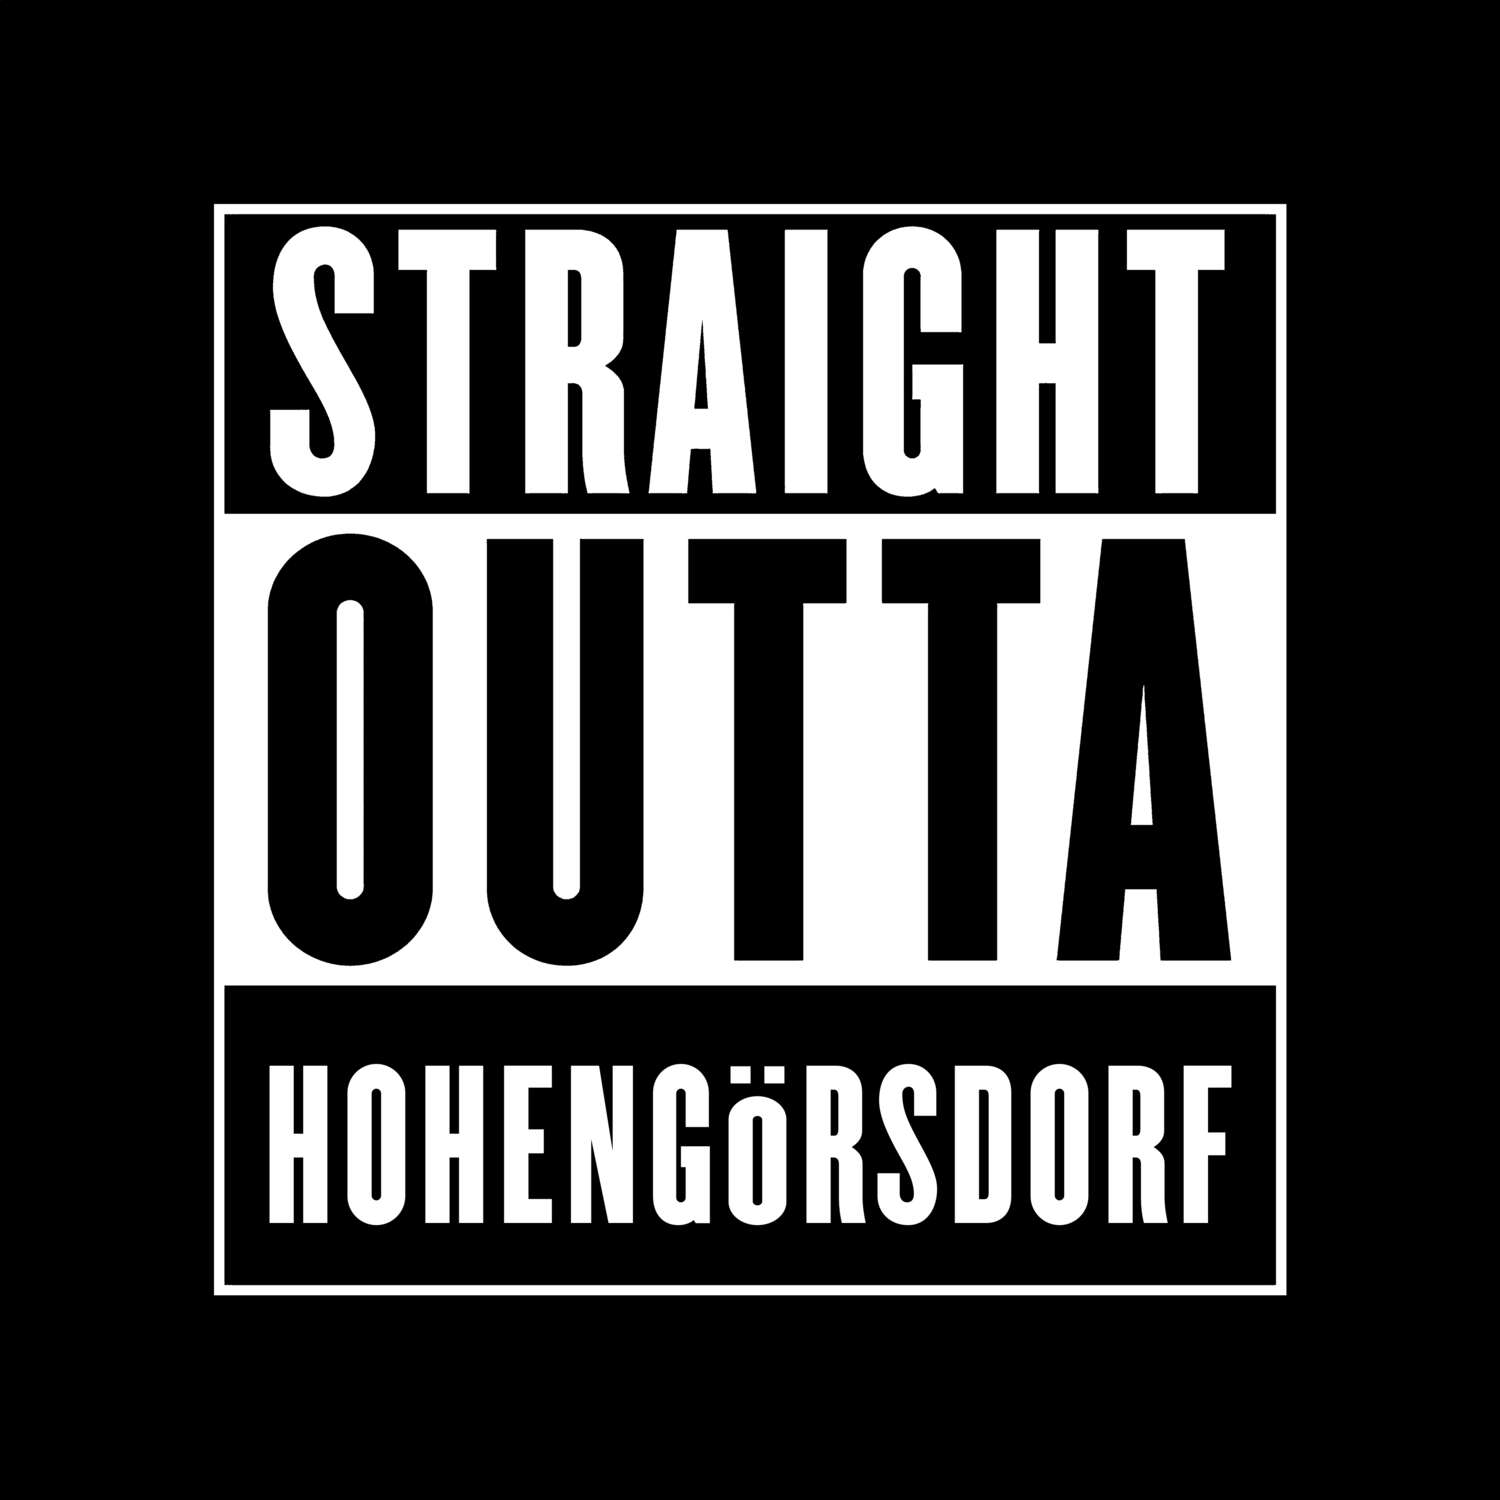 Hohengörsdorf T-Shirt »Straight Outta«